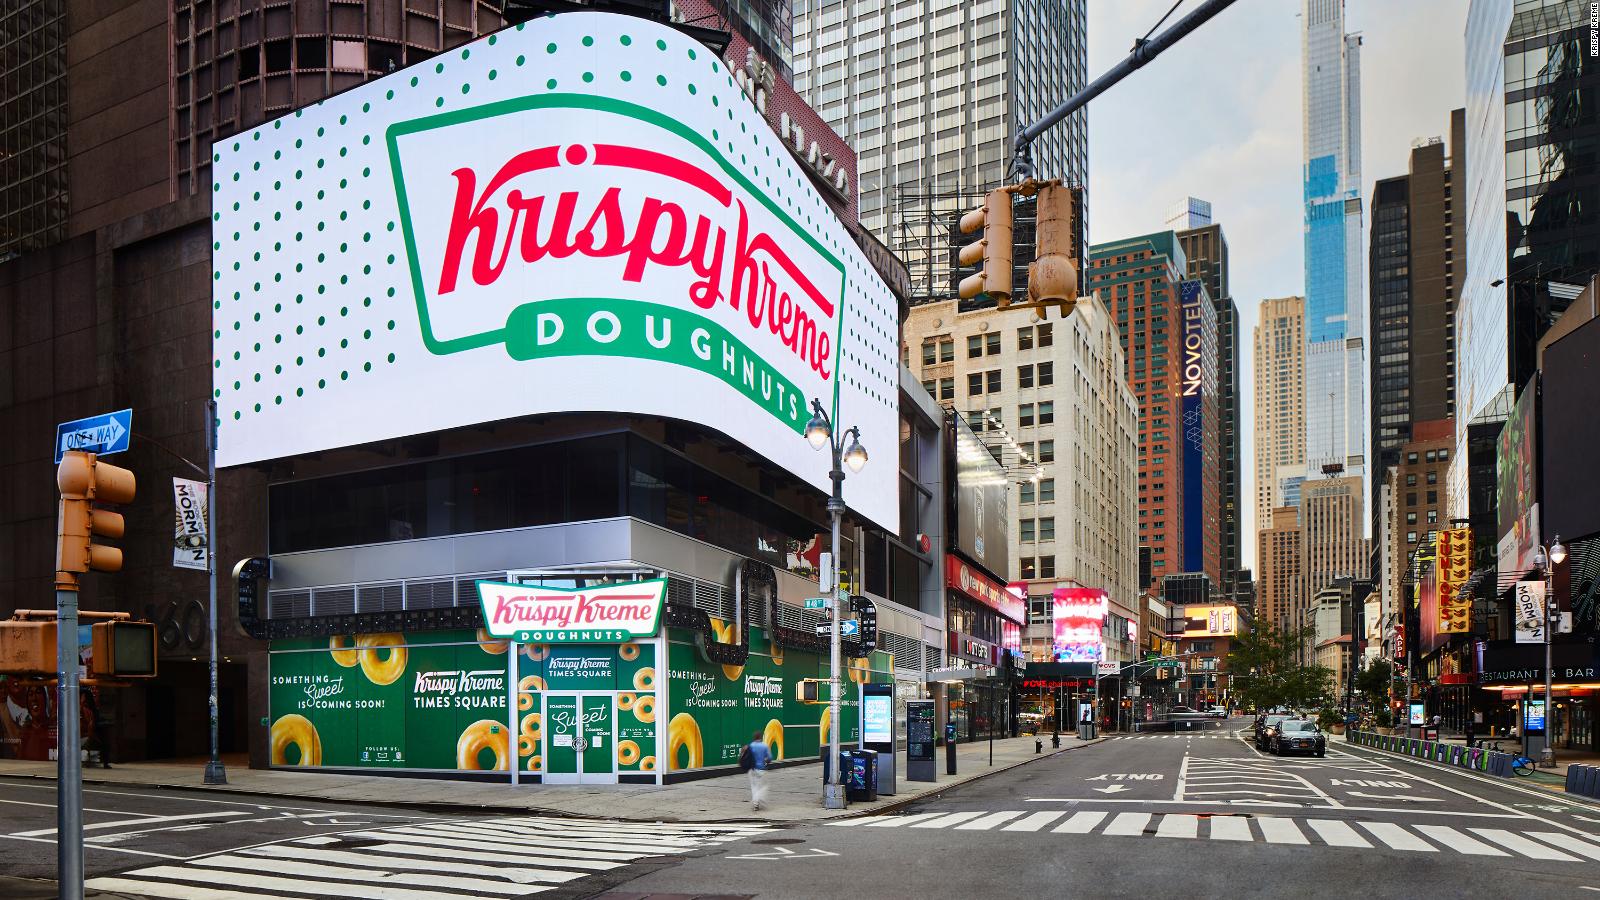 Historic Krispy Kreme in Atlanta catches fire - CNN